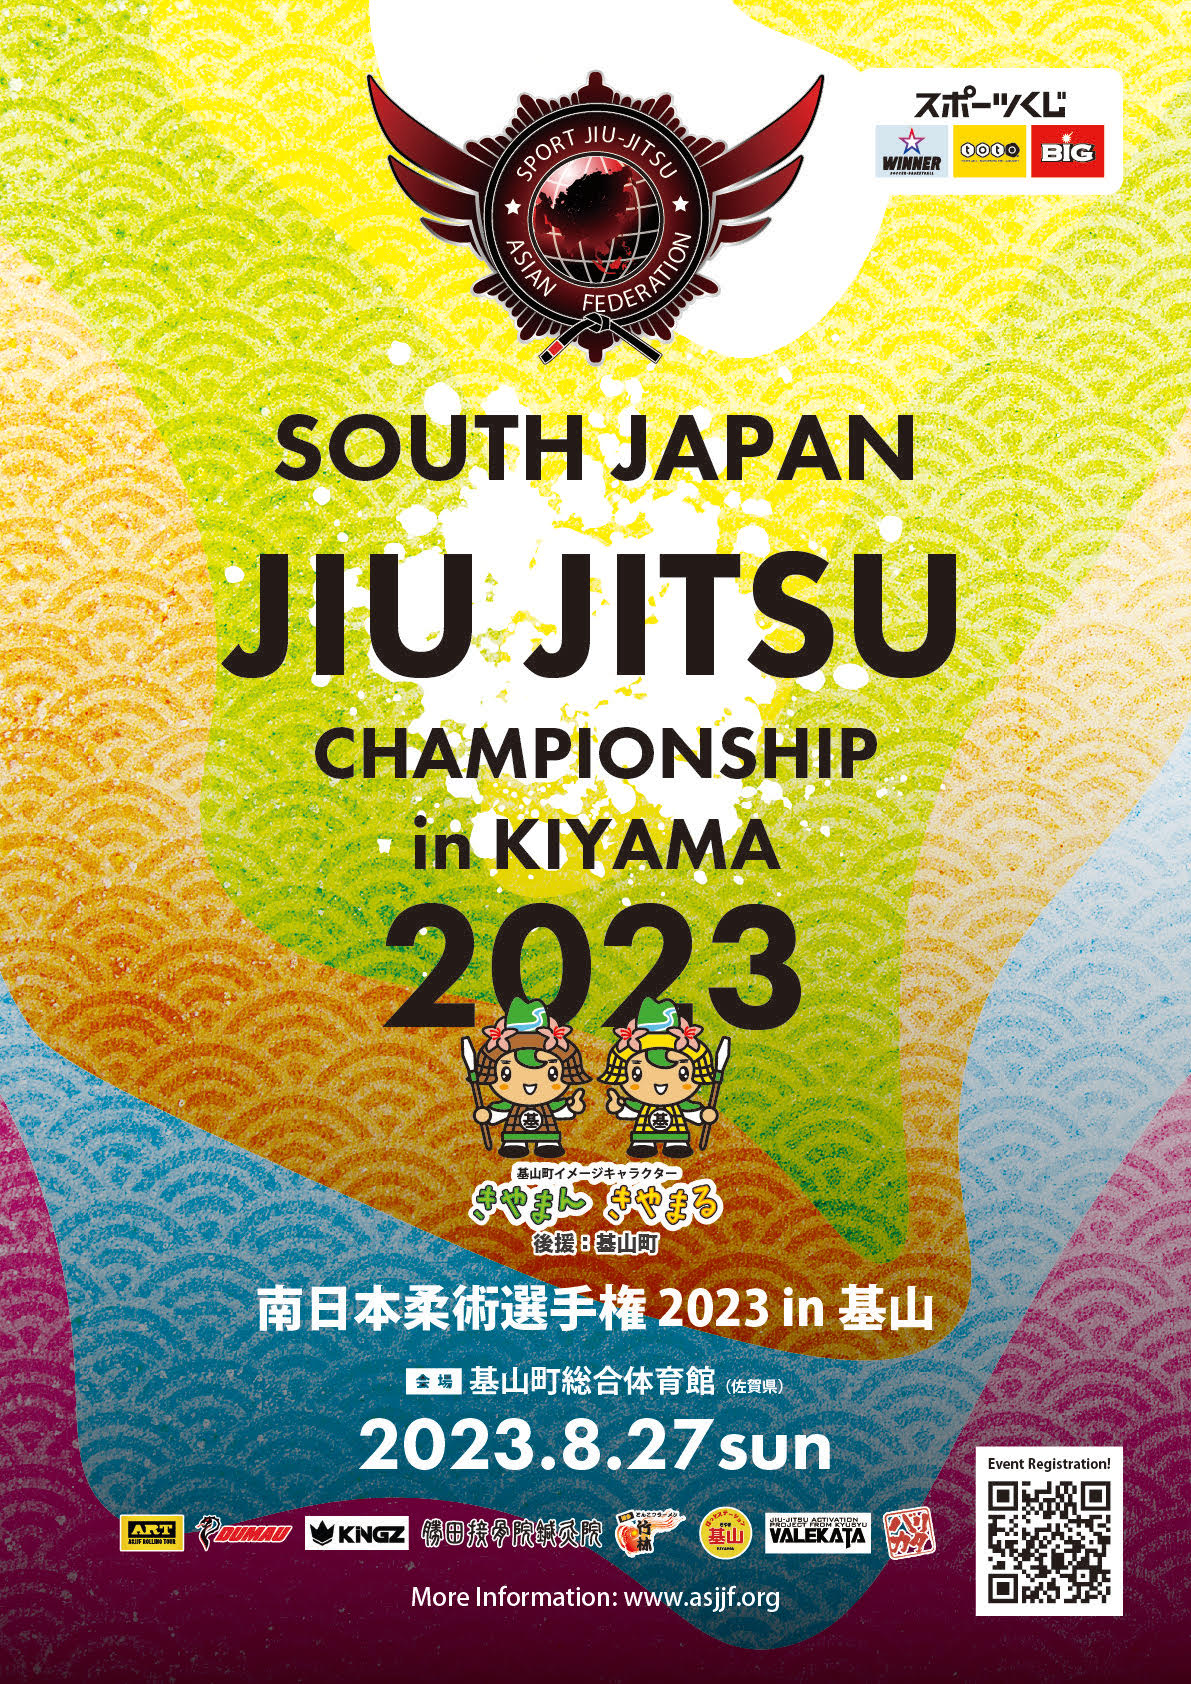 South Japan Jiu Jitsu Championship 2023 In Kiyama